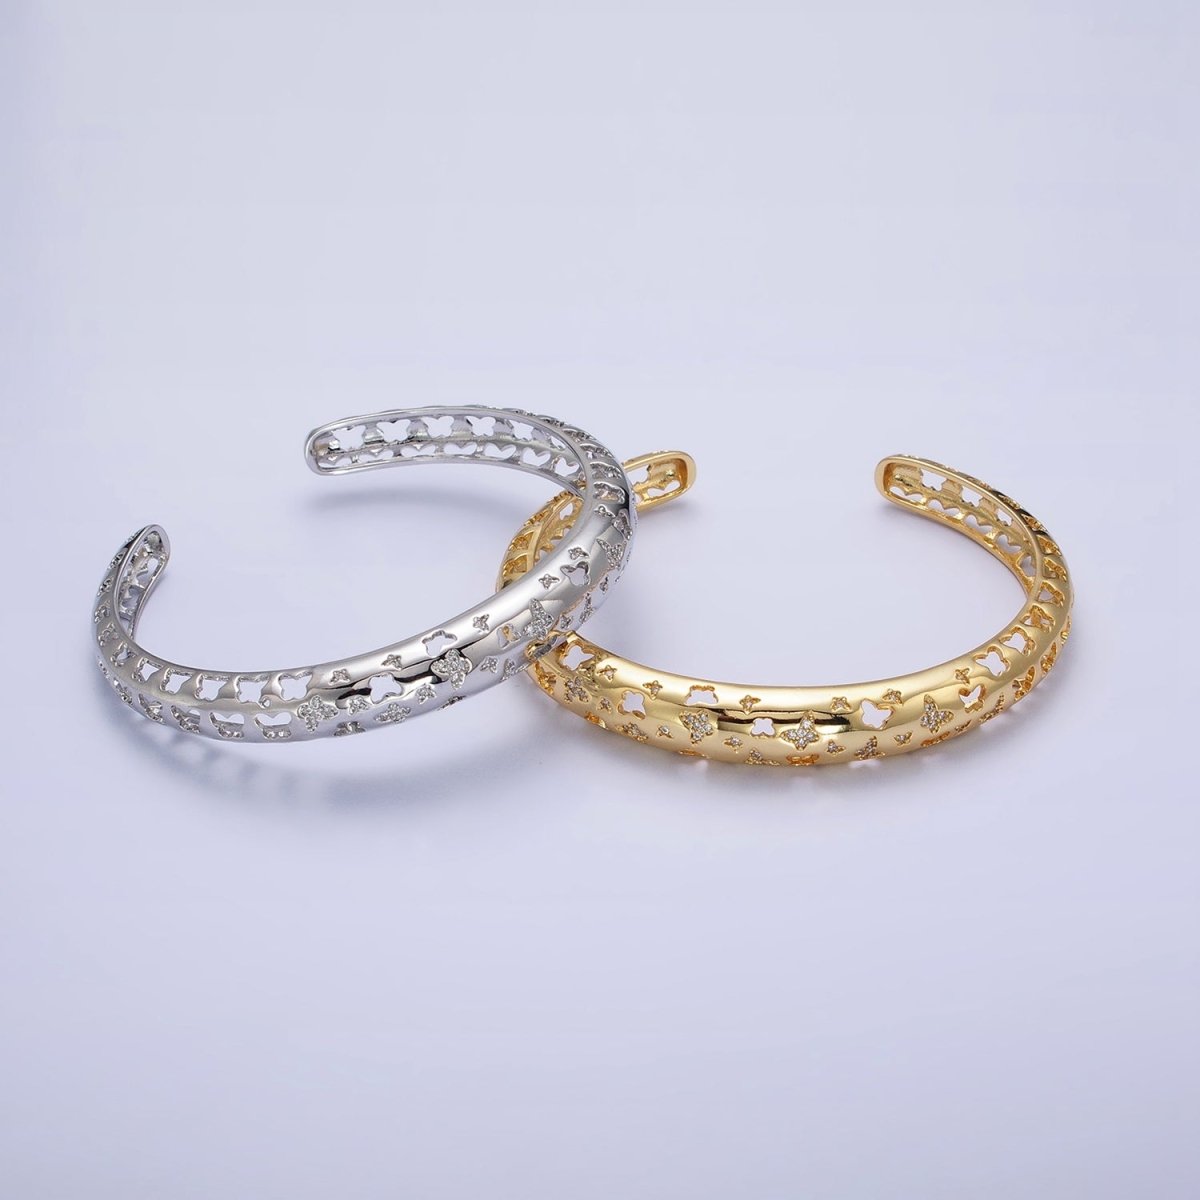 Gold Butterfly Wrist Cuff Bangle Bracelet CZ Mariposa Bracelet for Stackable Jewelry | WA-1685 WA-1686 Clearance Pricing - DLUXCA